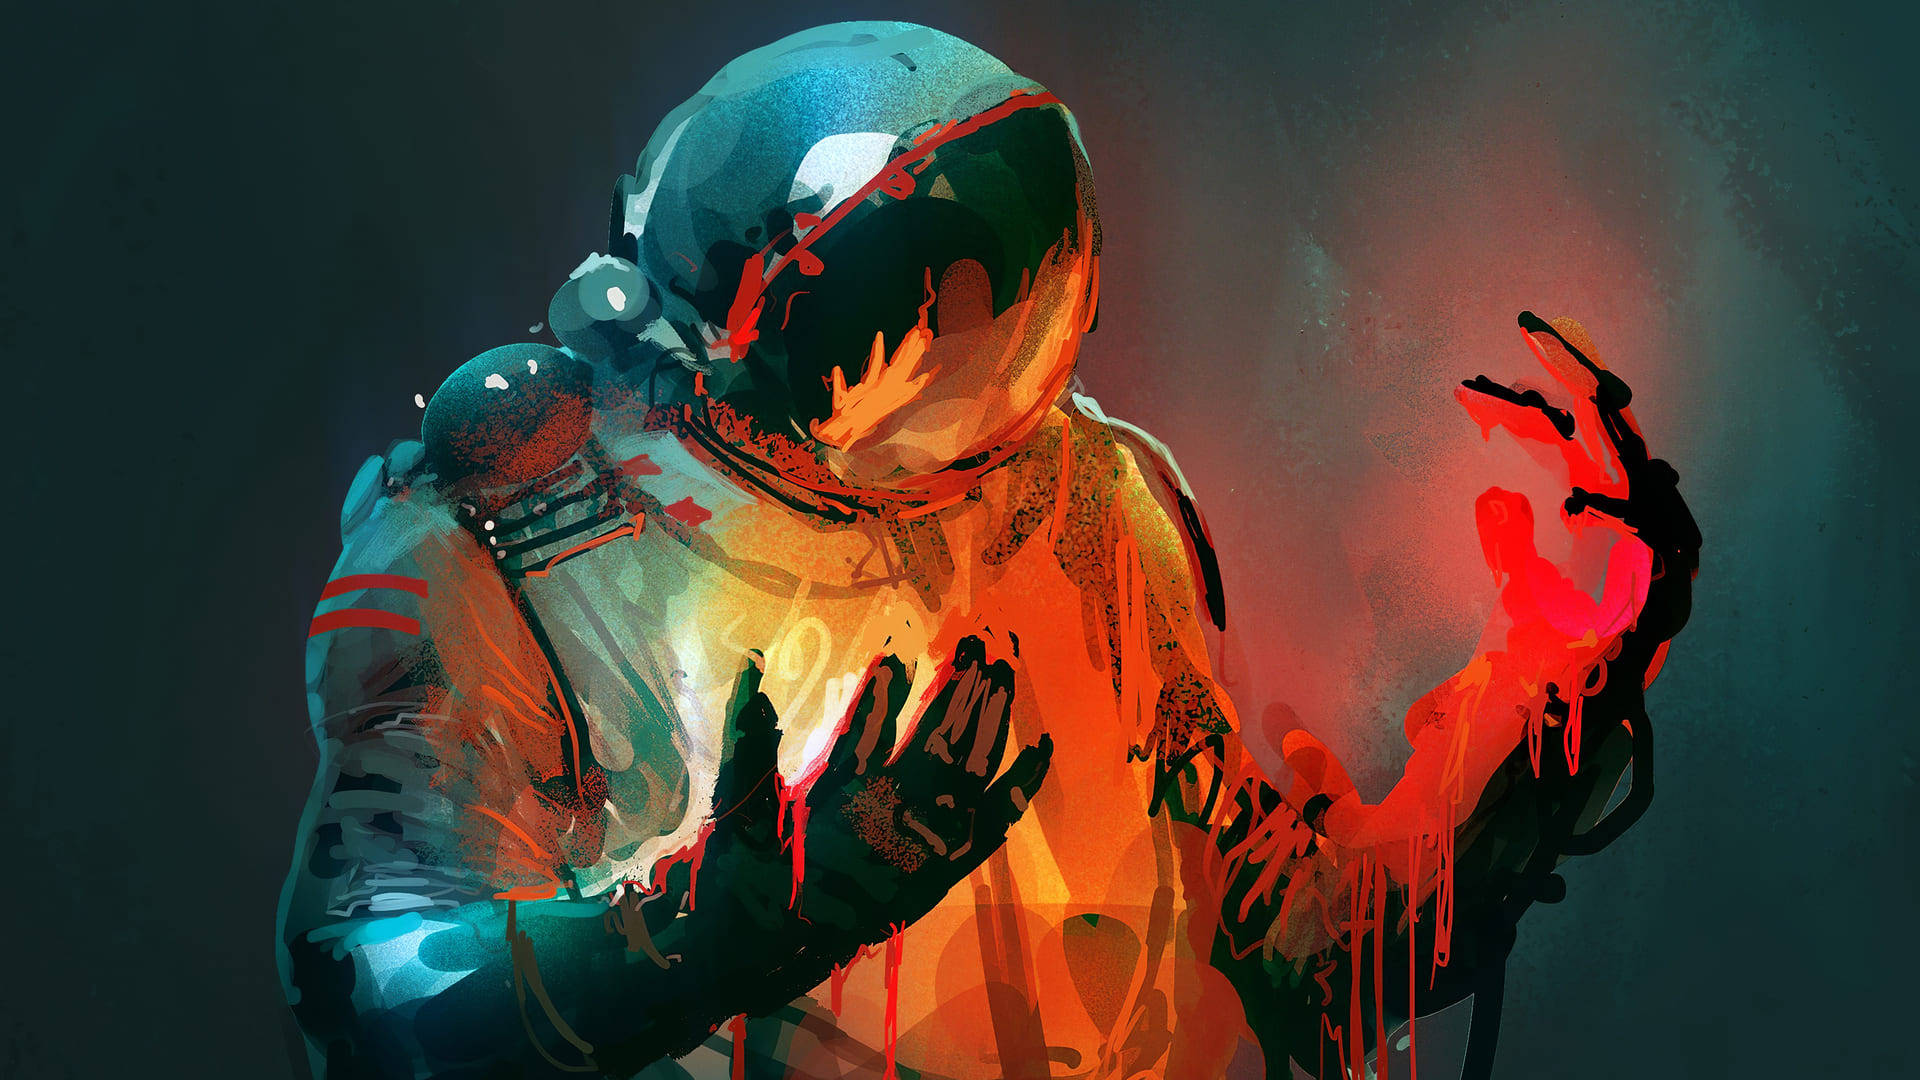 Astronautschmilzt Mit Gouache-kunst Wallpaper